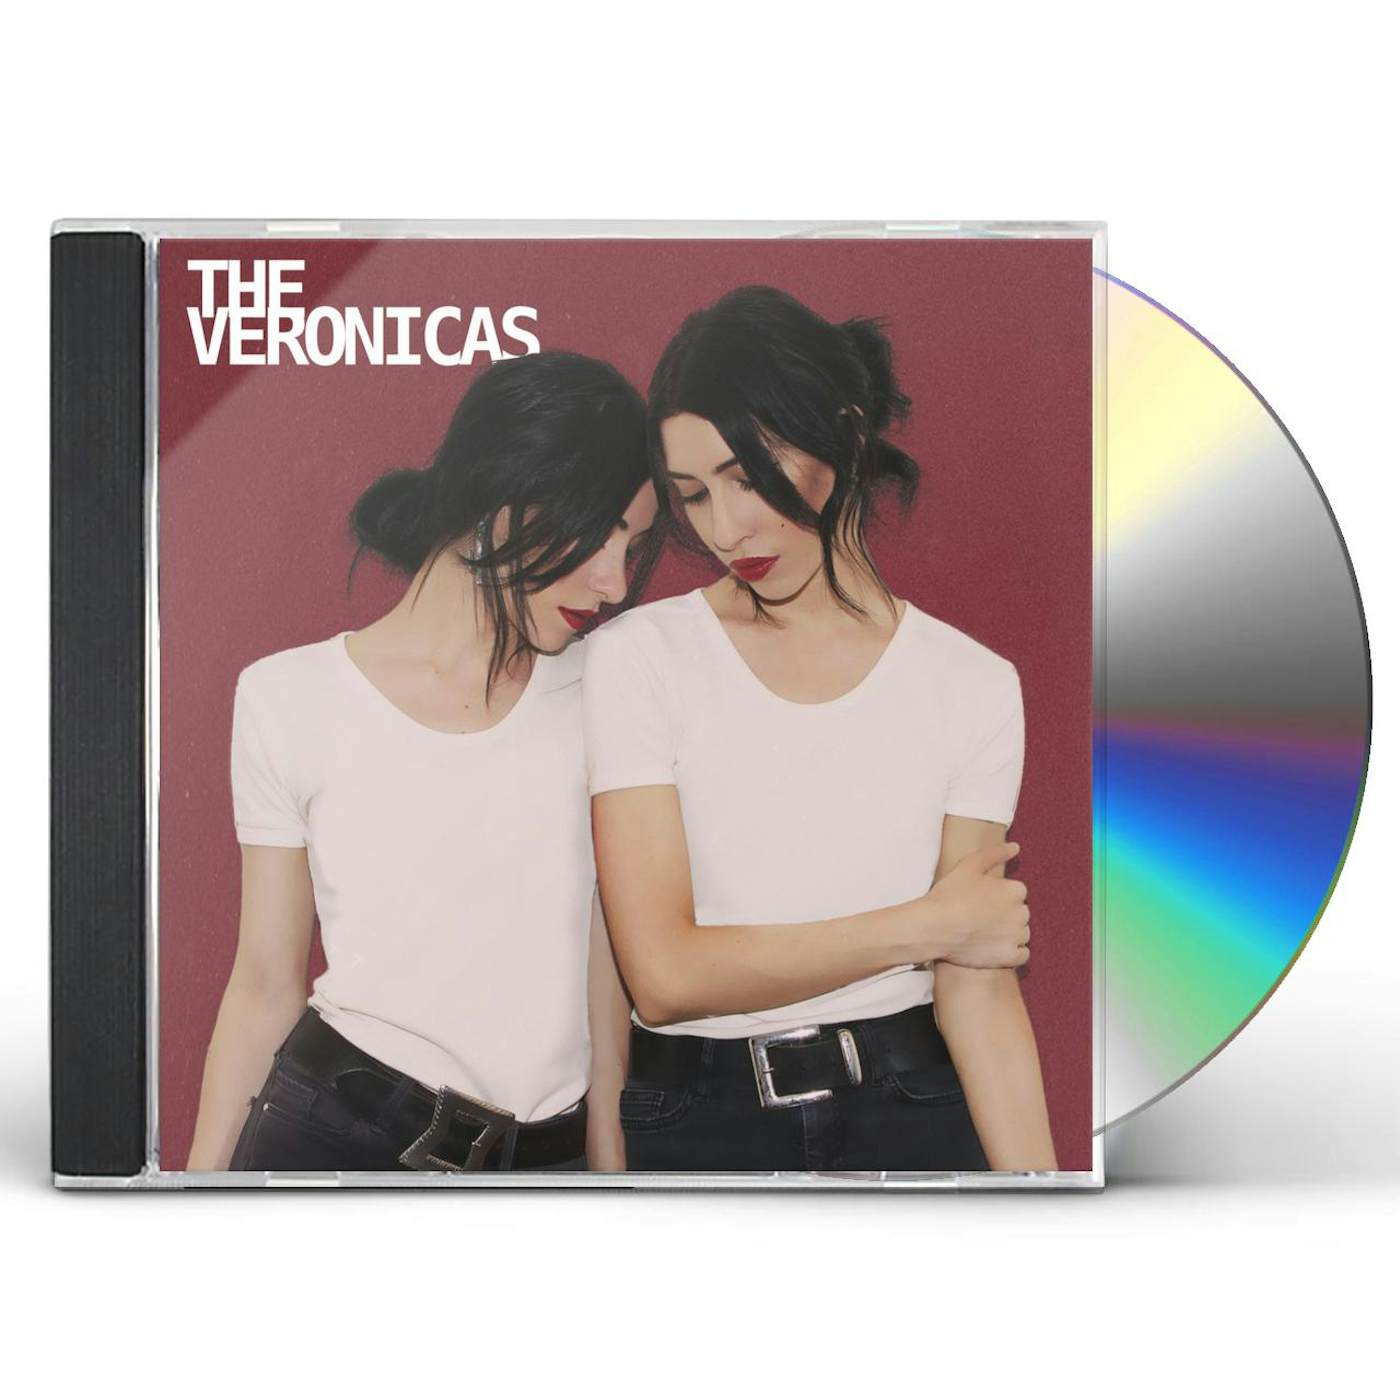 The Veronicas CD